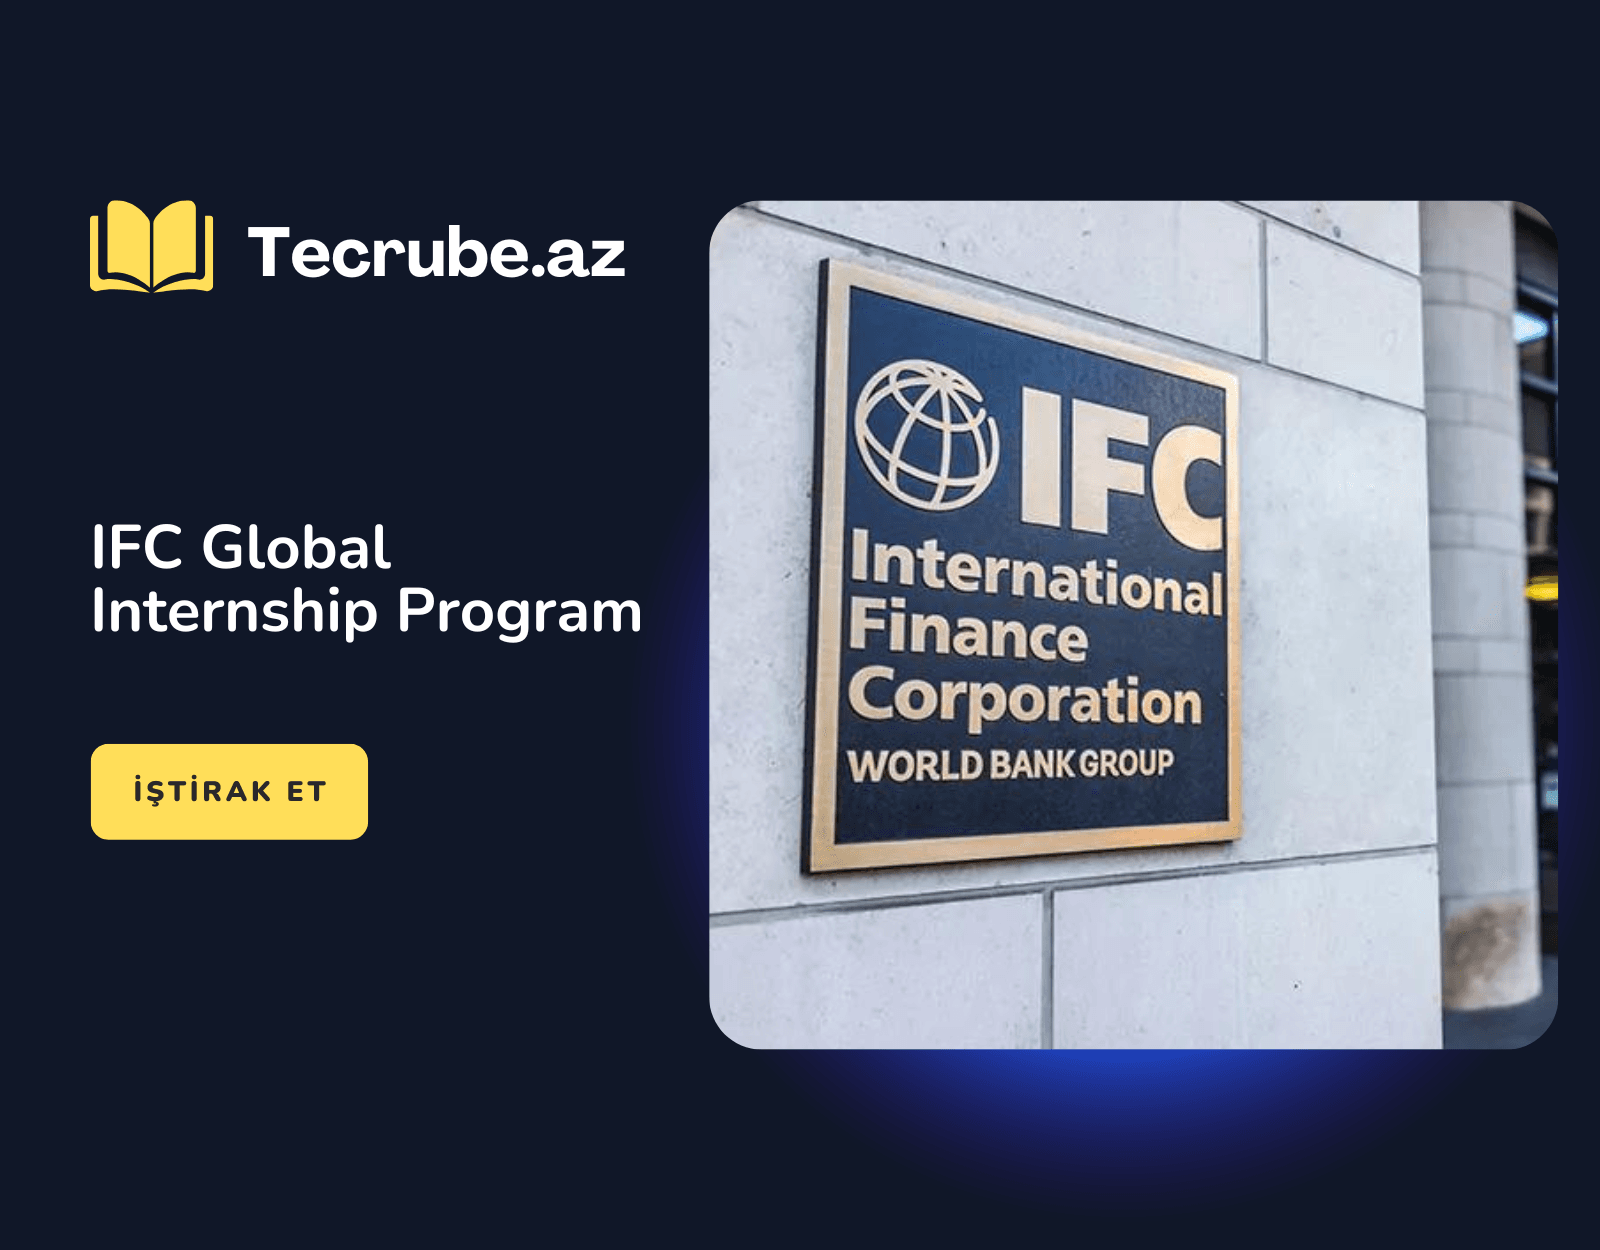 IFC Global Internship Program